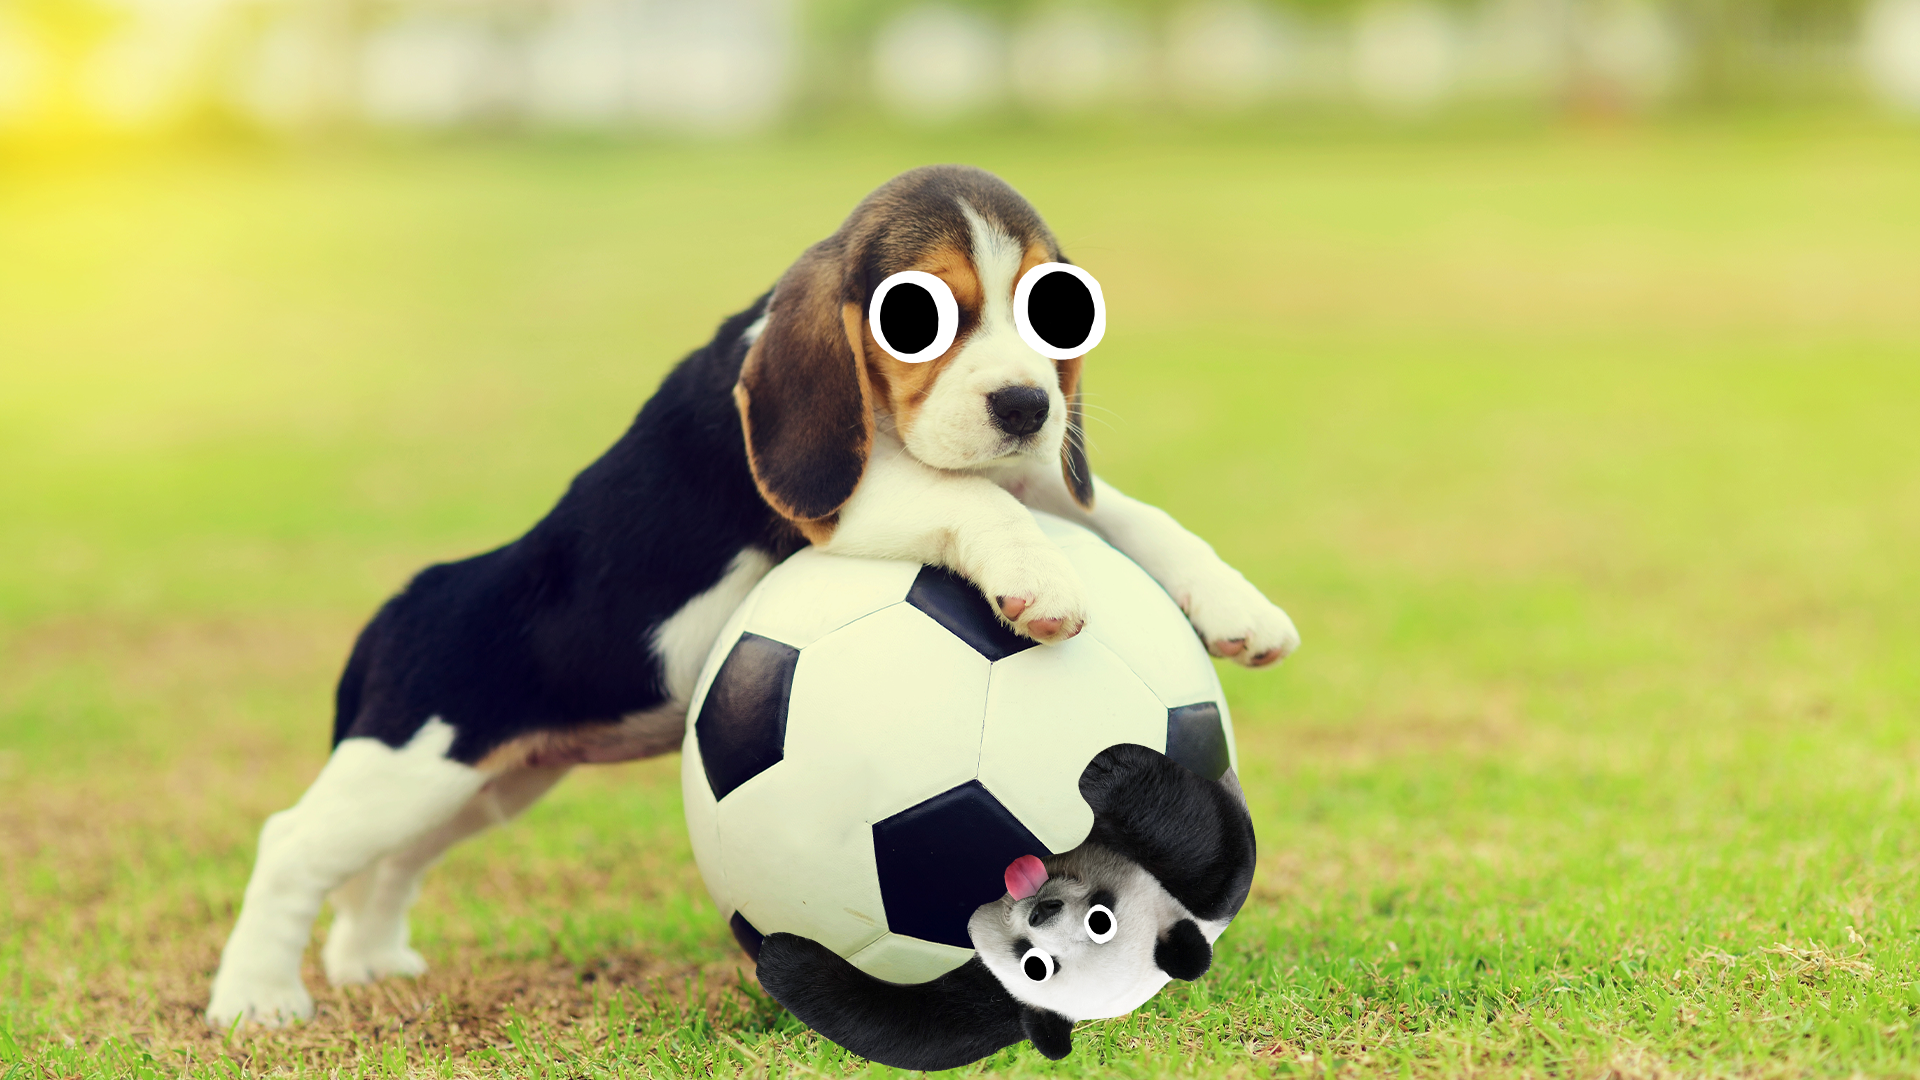 Cut dog and derpy panda on football